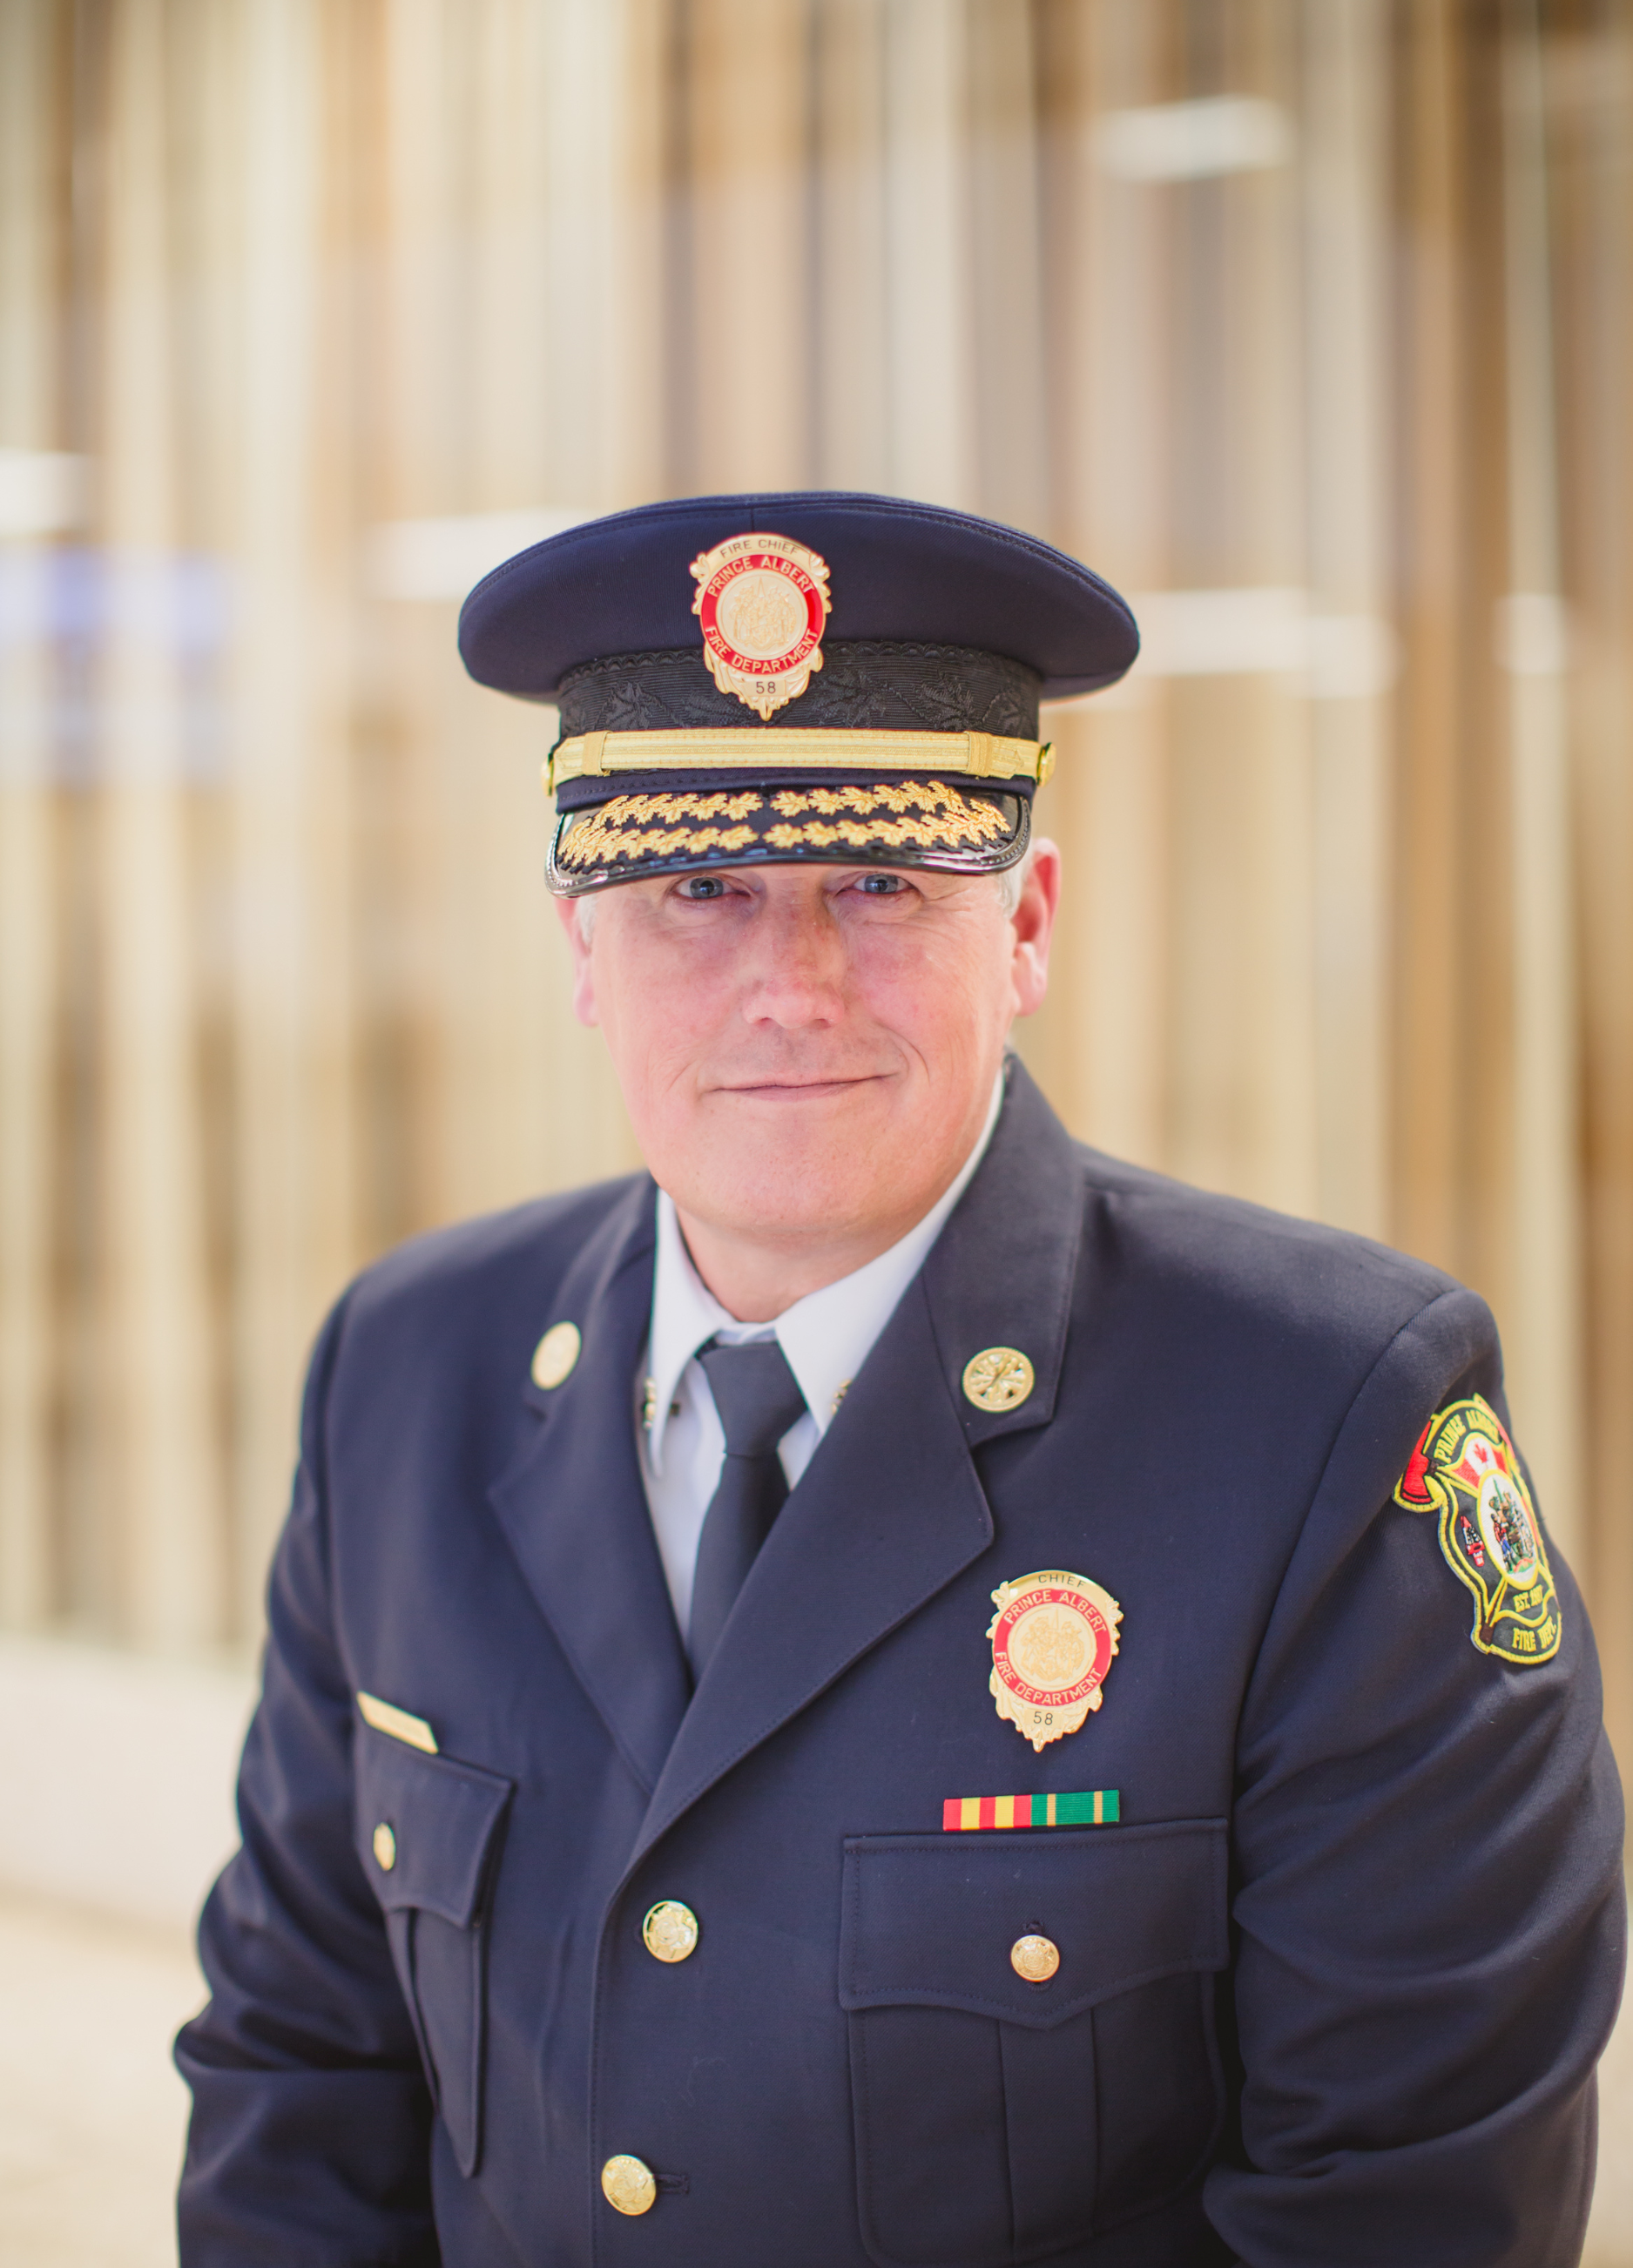 Acting Fire Chief Kris Olsen